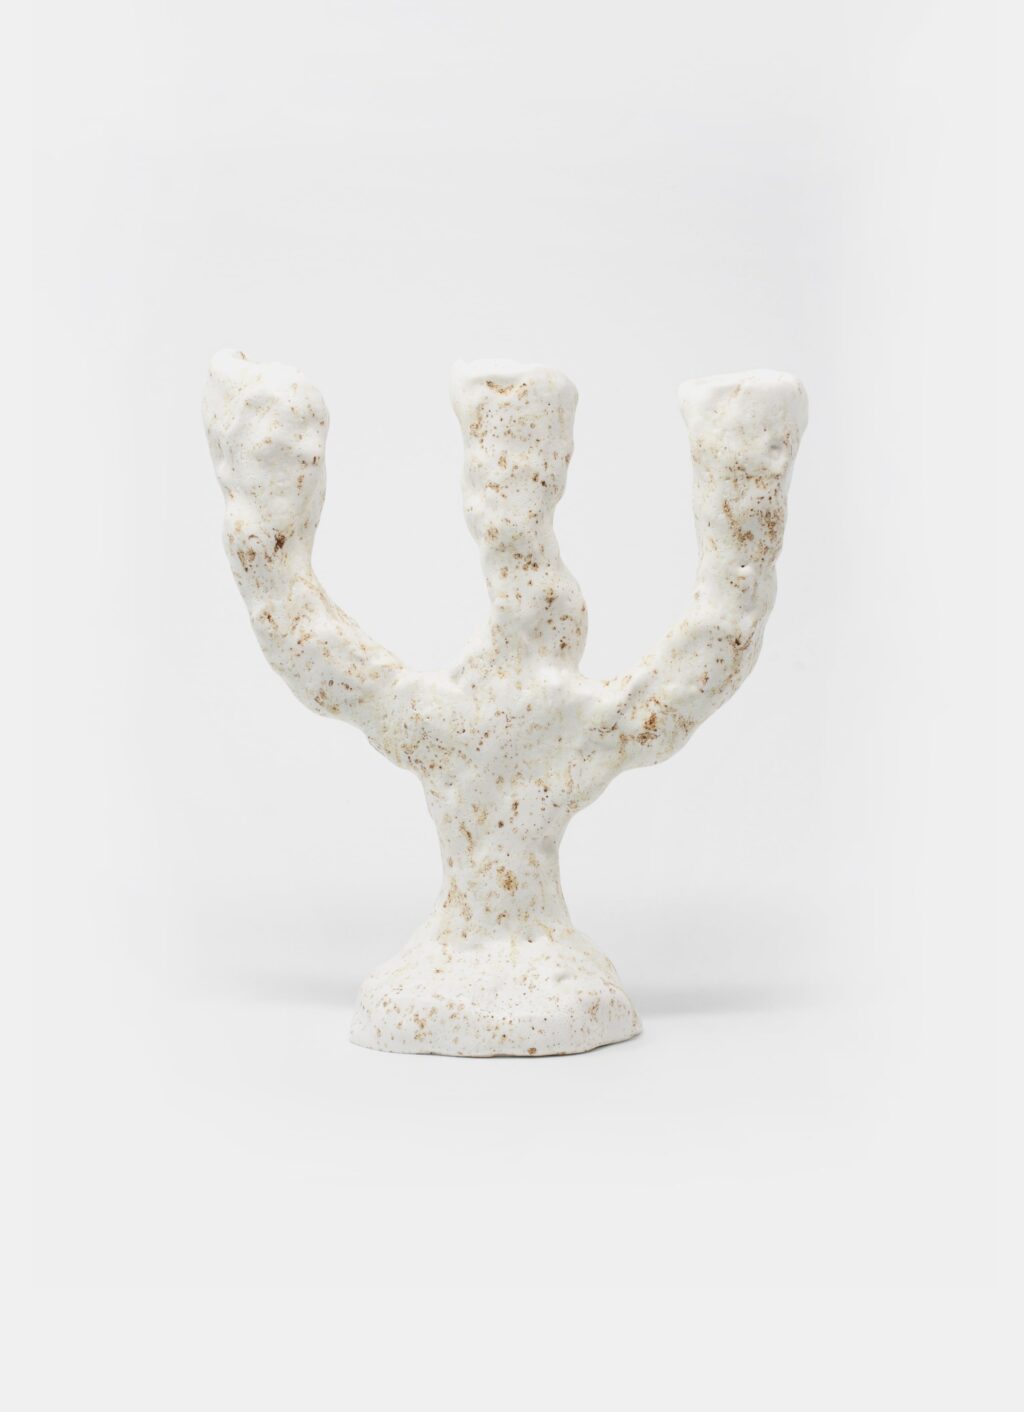 Studio Fletta - Minute -Stoneware candle holder - Speckled white